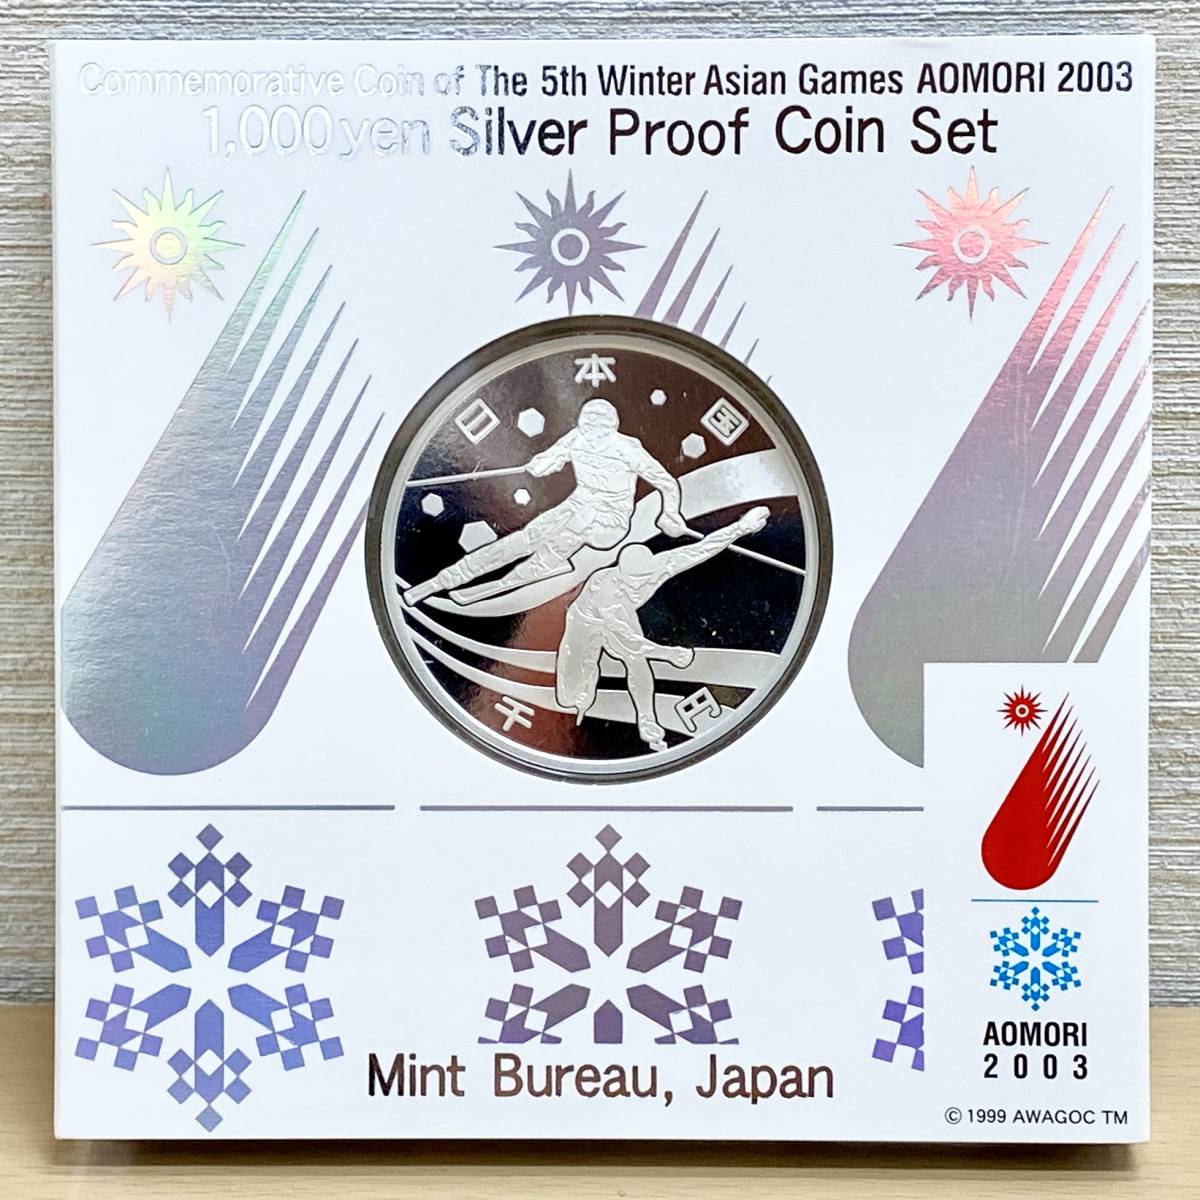 春先取りの 記念硬貨 第5回アジア冬季競技大会 青森2003 千円銀貨幣